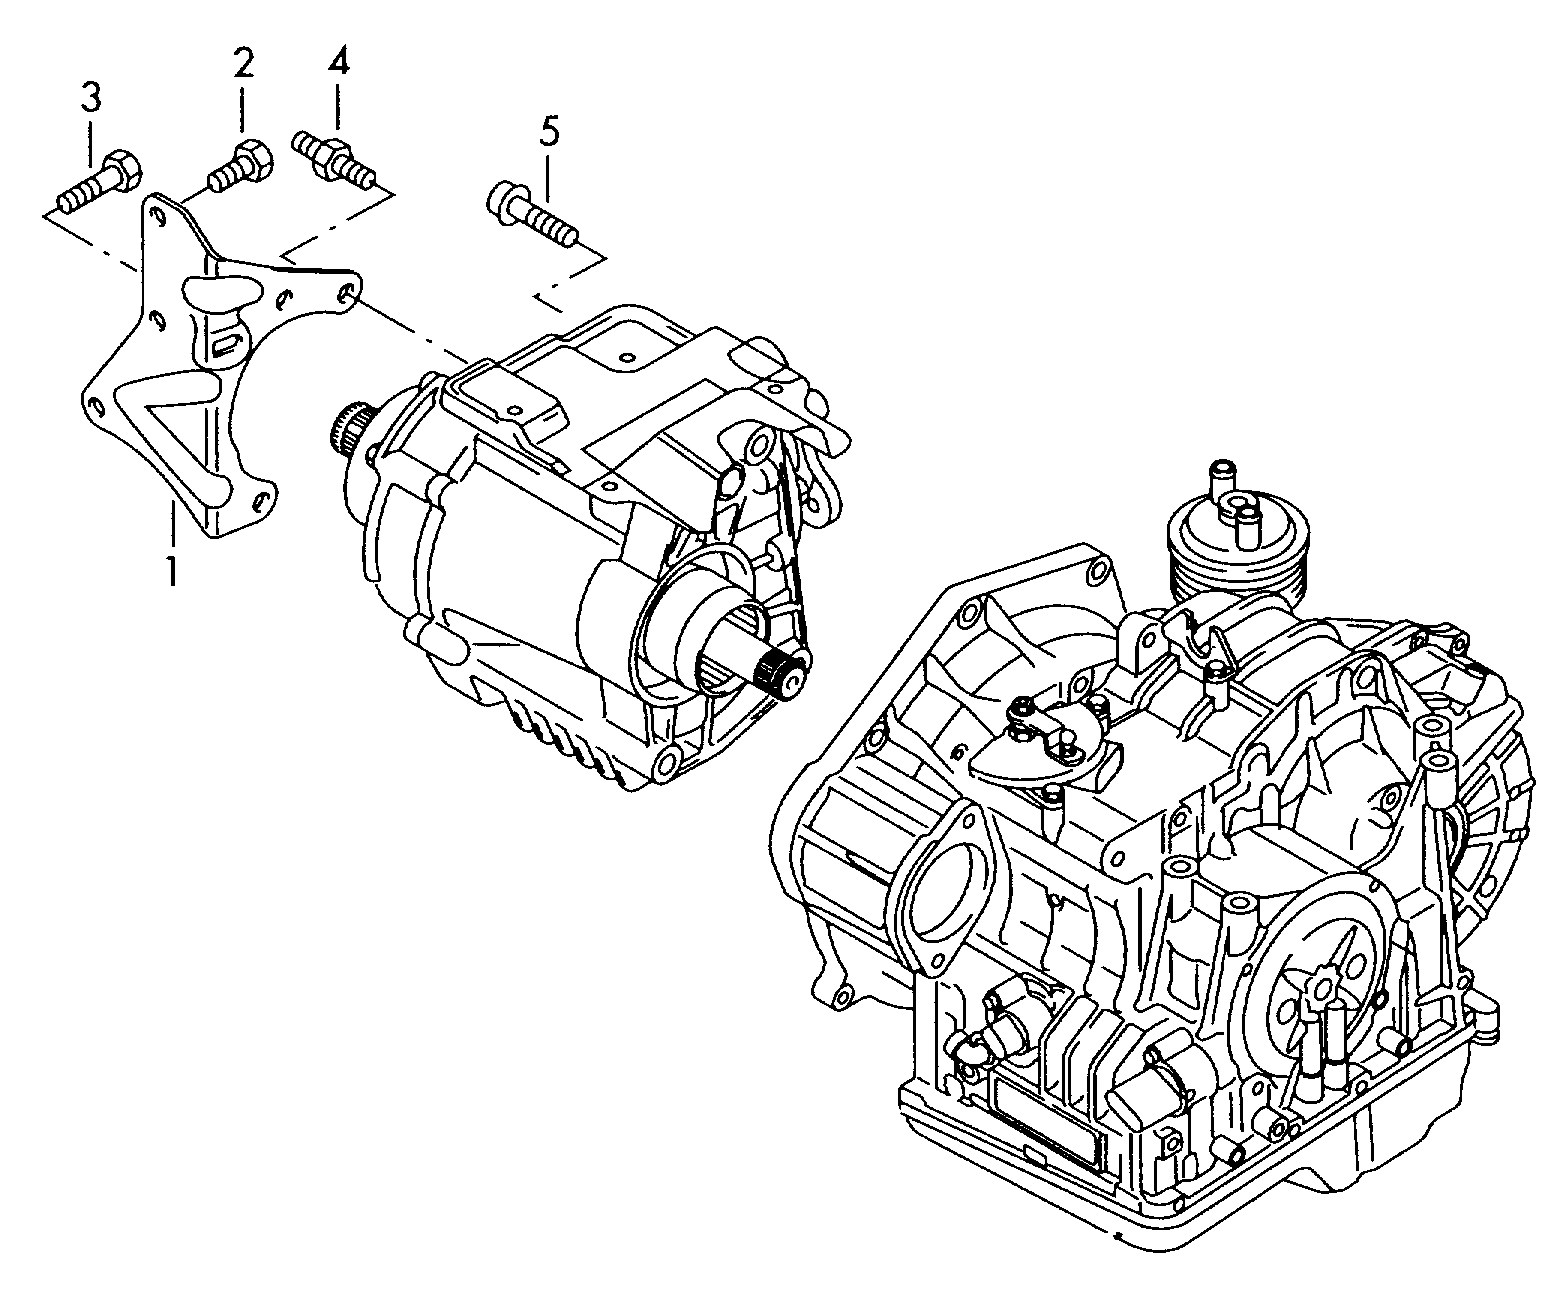 transmission securing partsfinal drivefor four-wheel drive front - Passat/Variant/Santana - pa